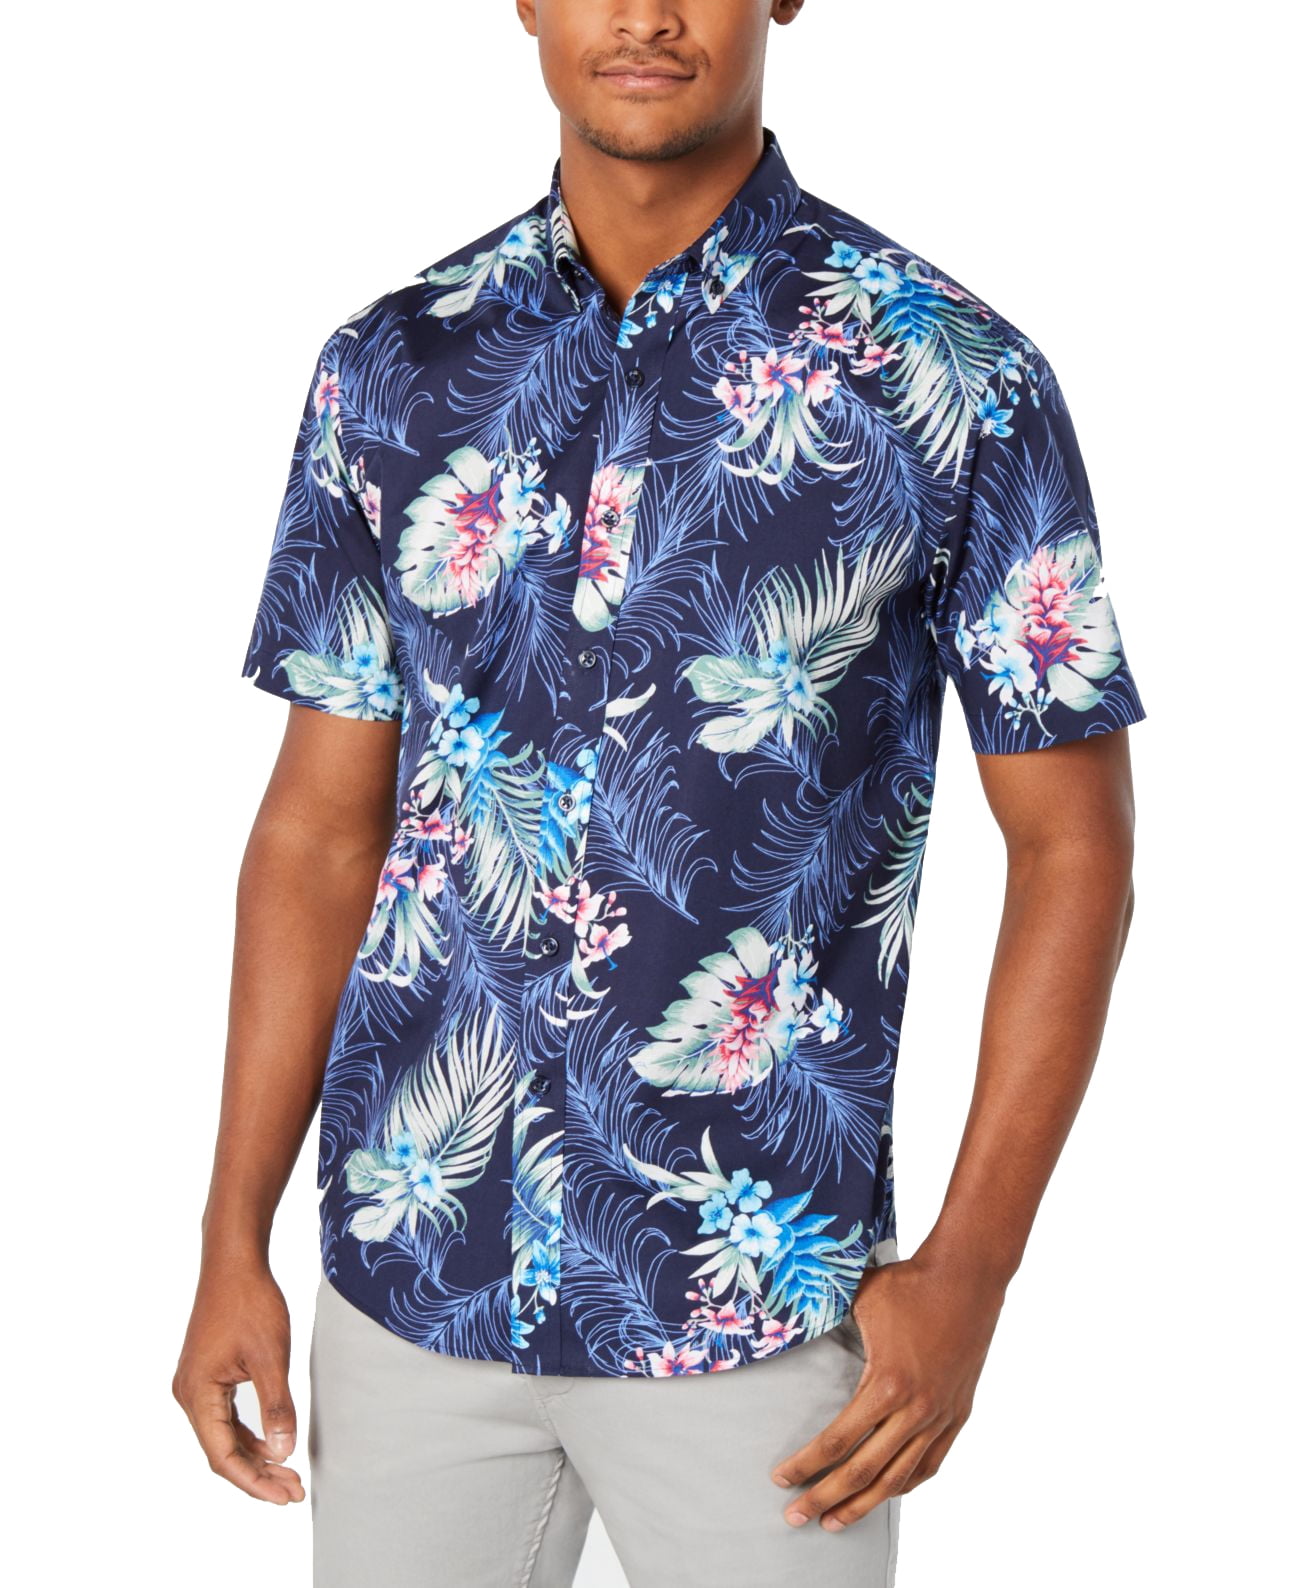 Pdbokew Men's Sun Protection Fishing Shirts Long Sleeve Travel Work Shirts for Men UPF50+ Button Down Shirts with Zipper Pockets Mist Blue XL